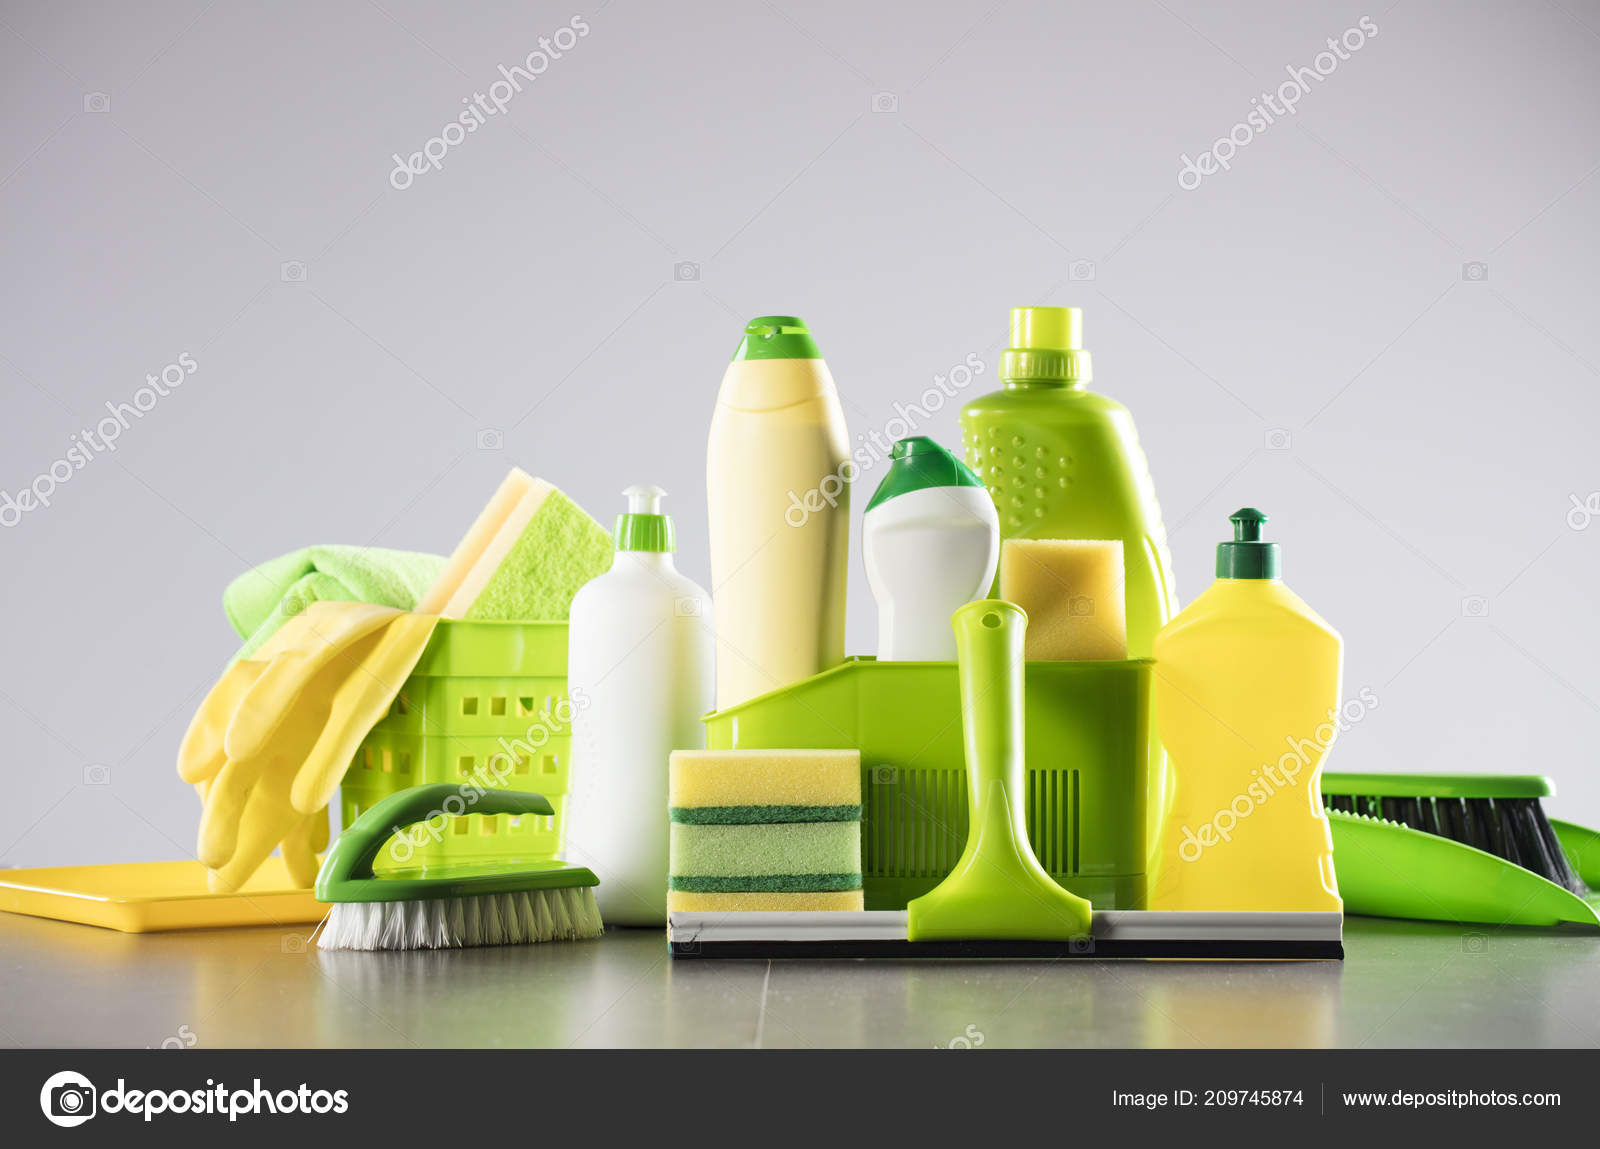 https://st4.depositphotos.com/10796538/20974/i/1600/depositphotos_209745874-stock-photo-house-office-cleaning-theme-set.jpg